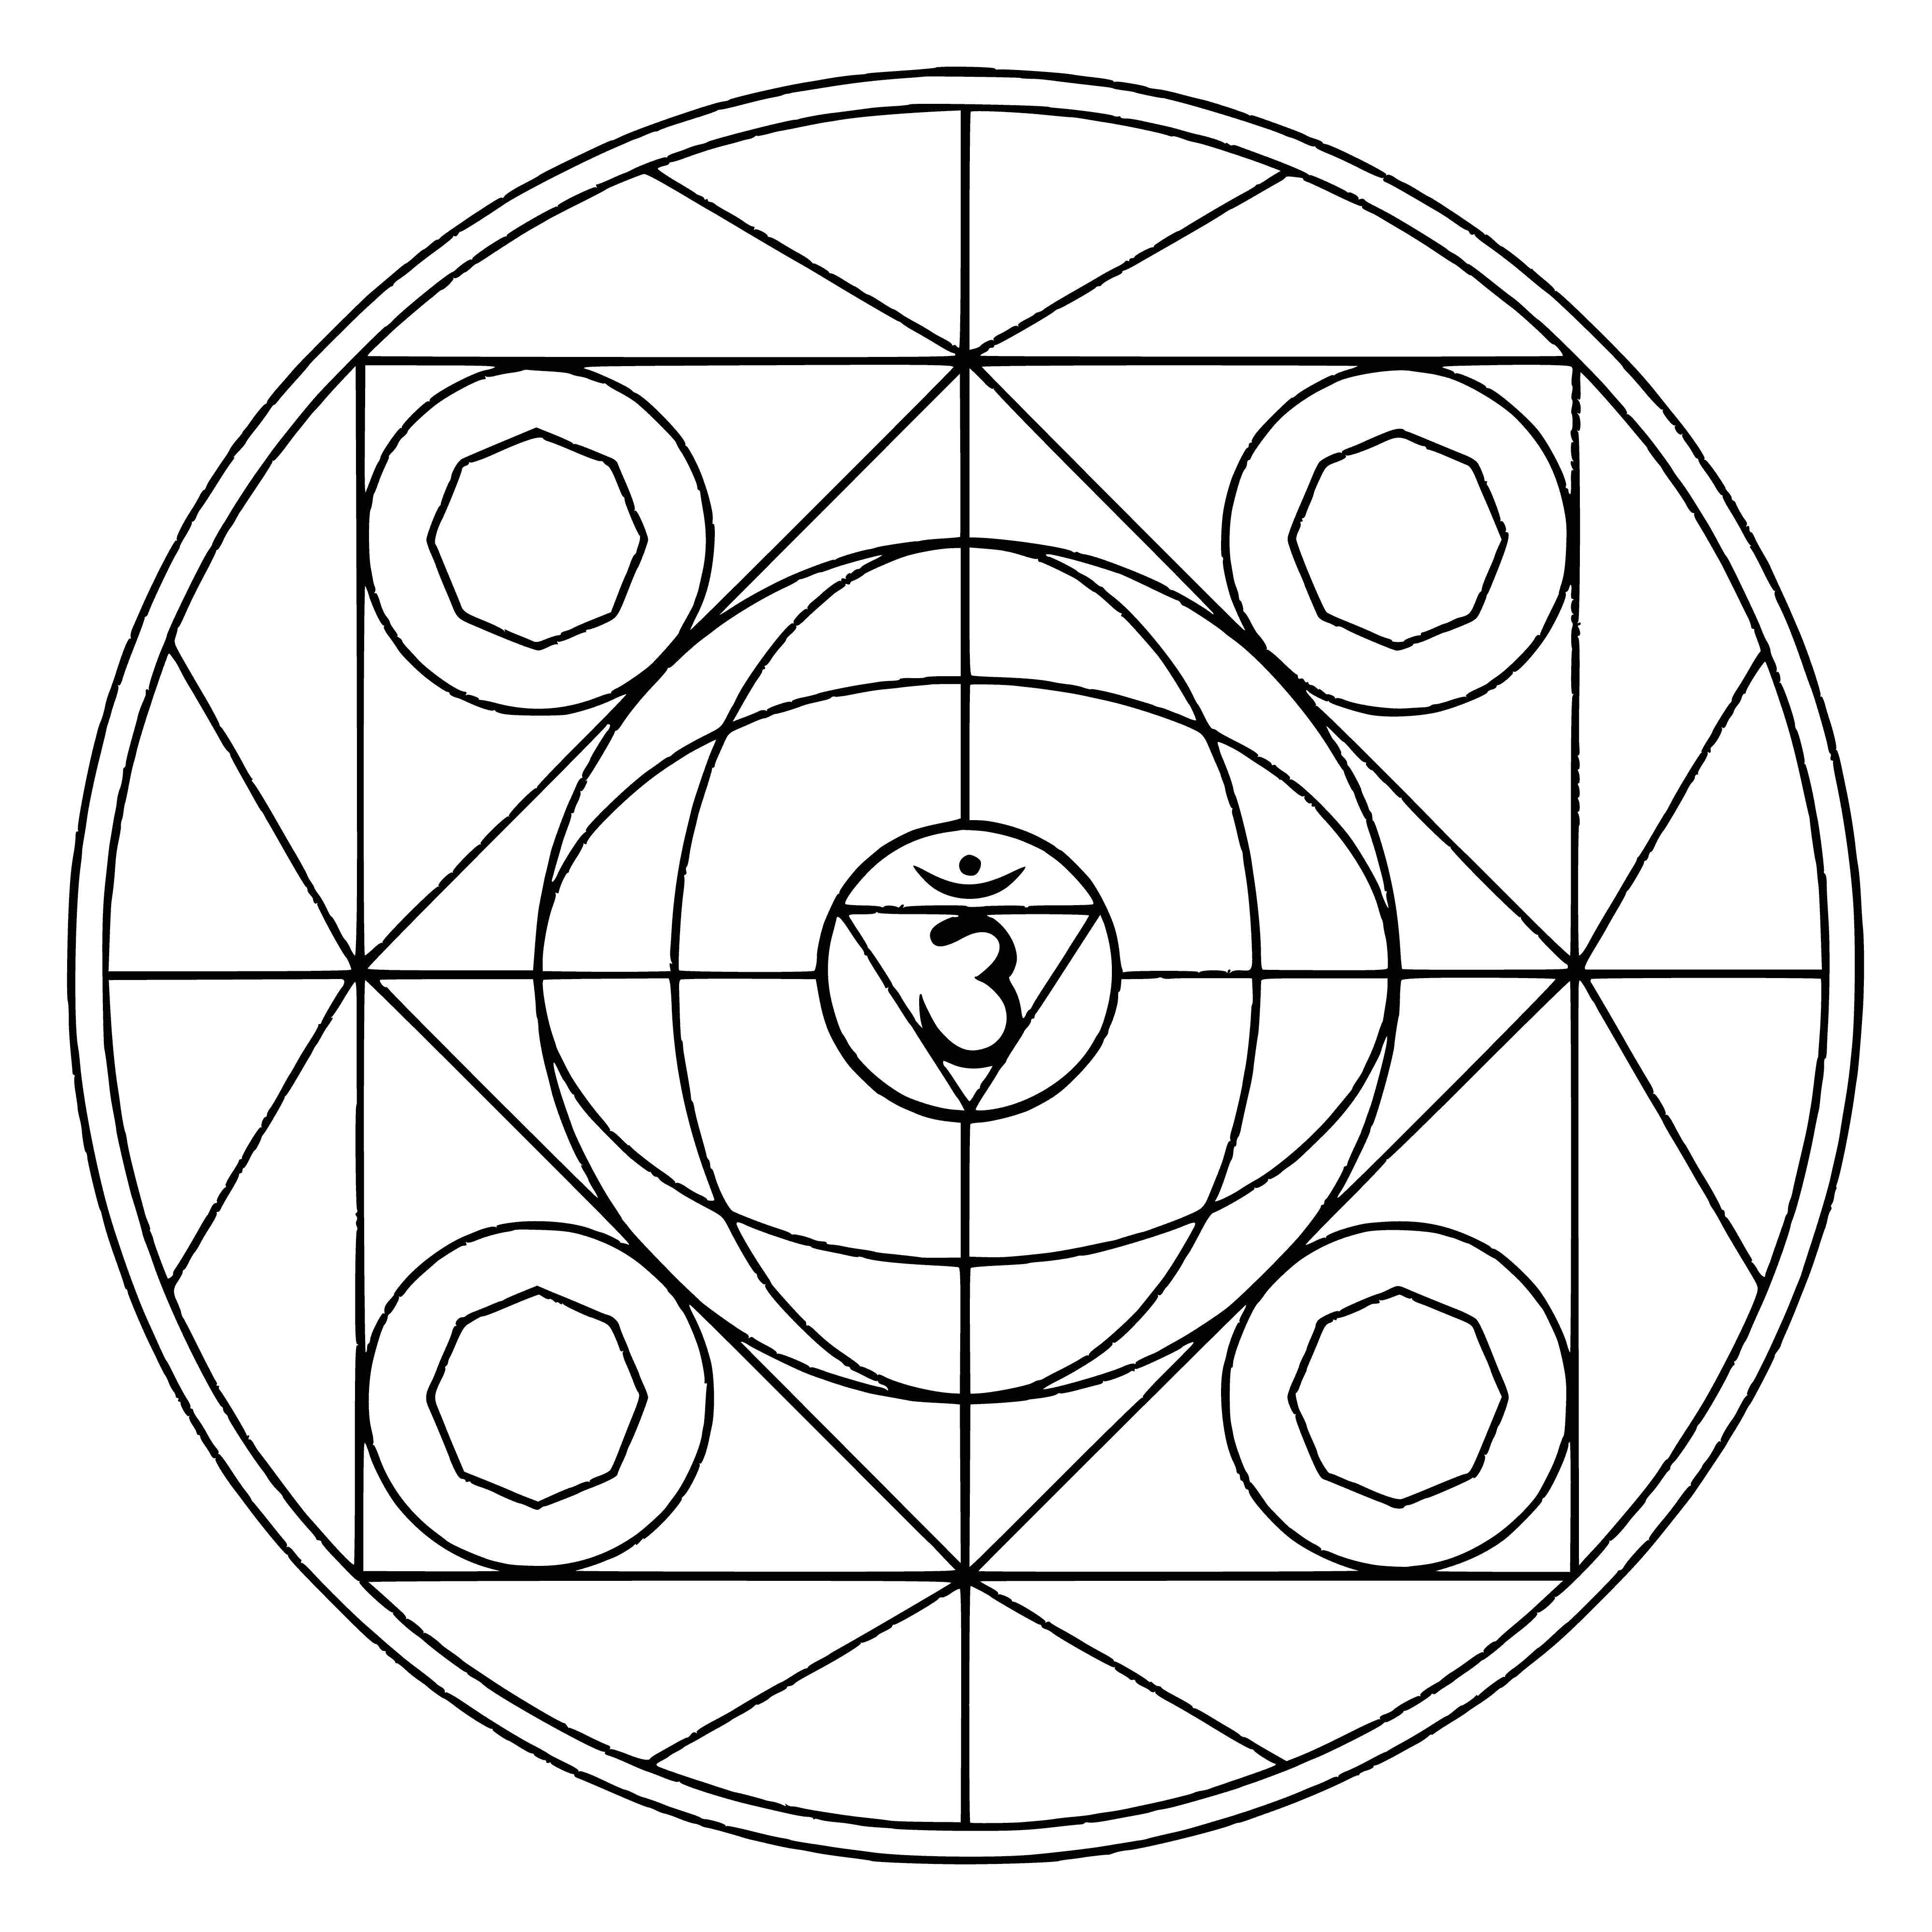 Mandala mit dem Symbol von Ajna Malseite